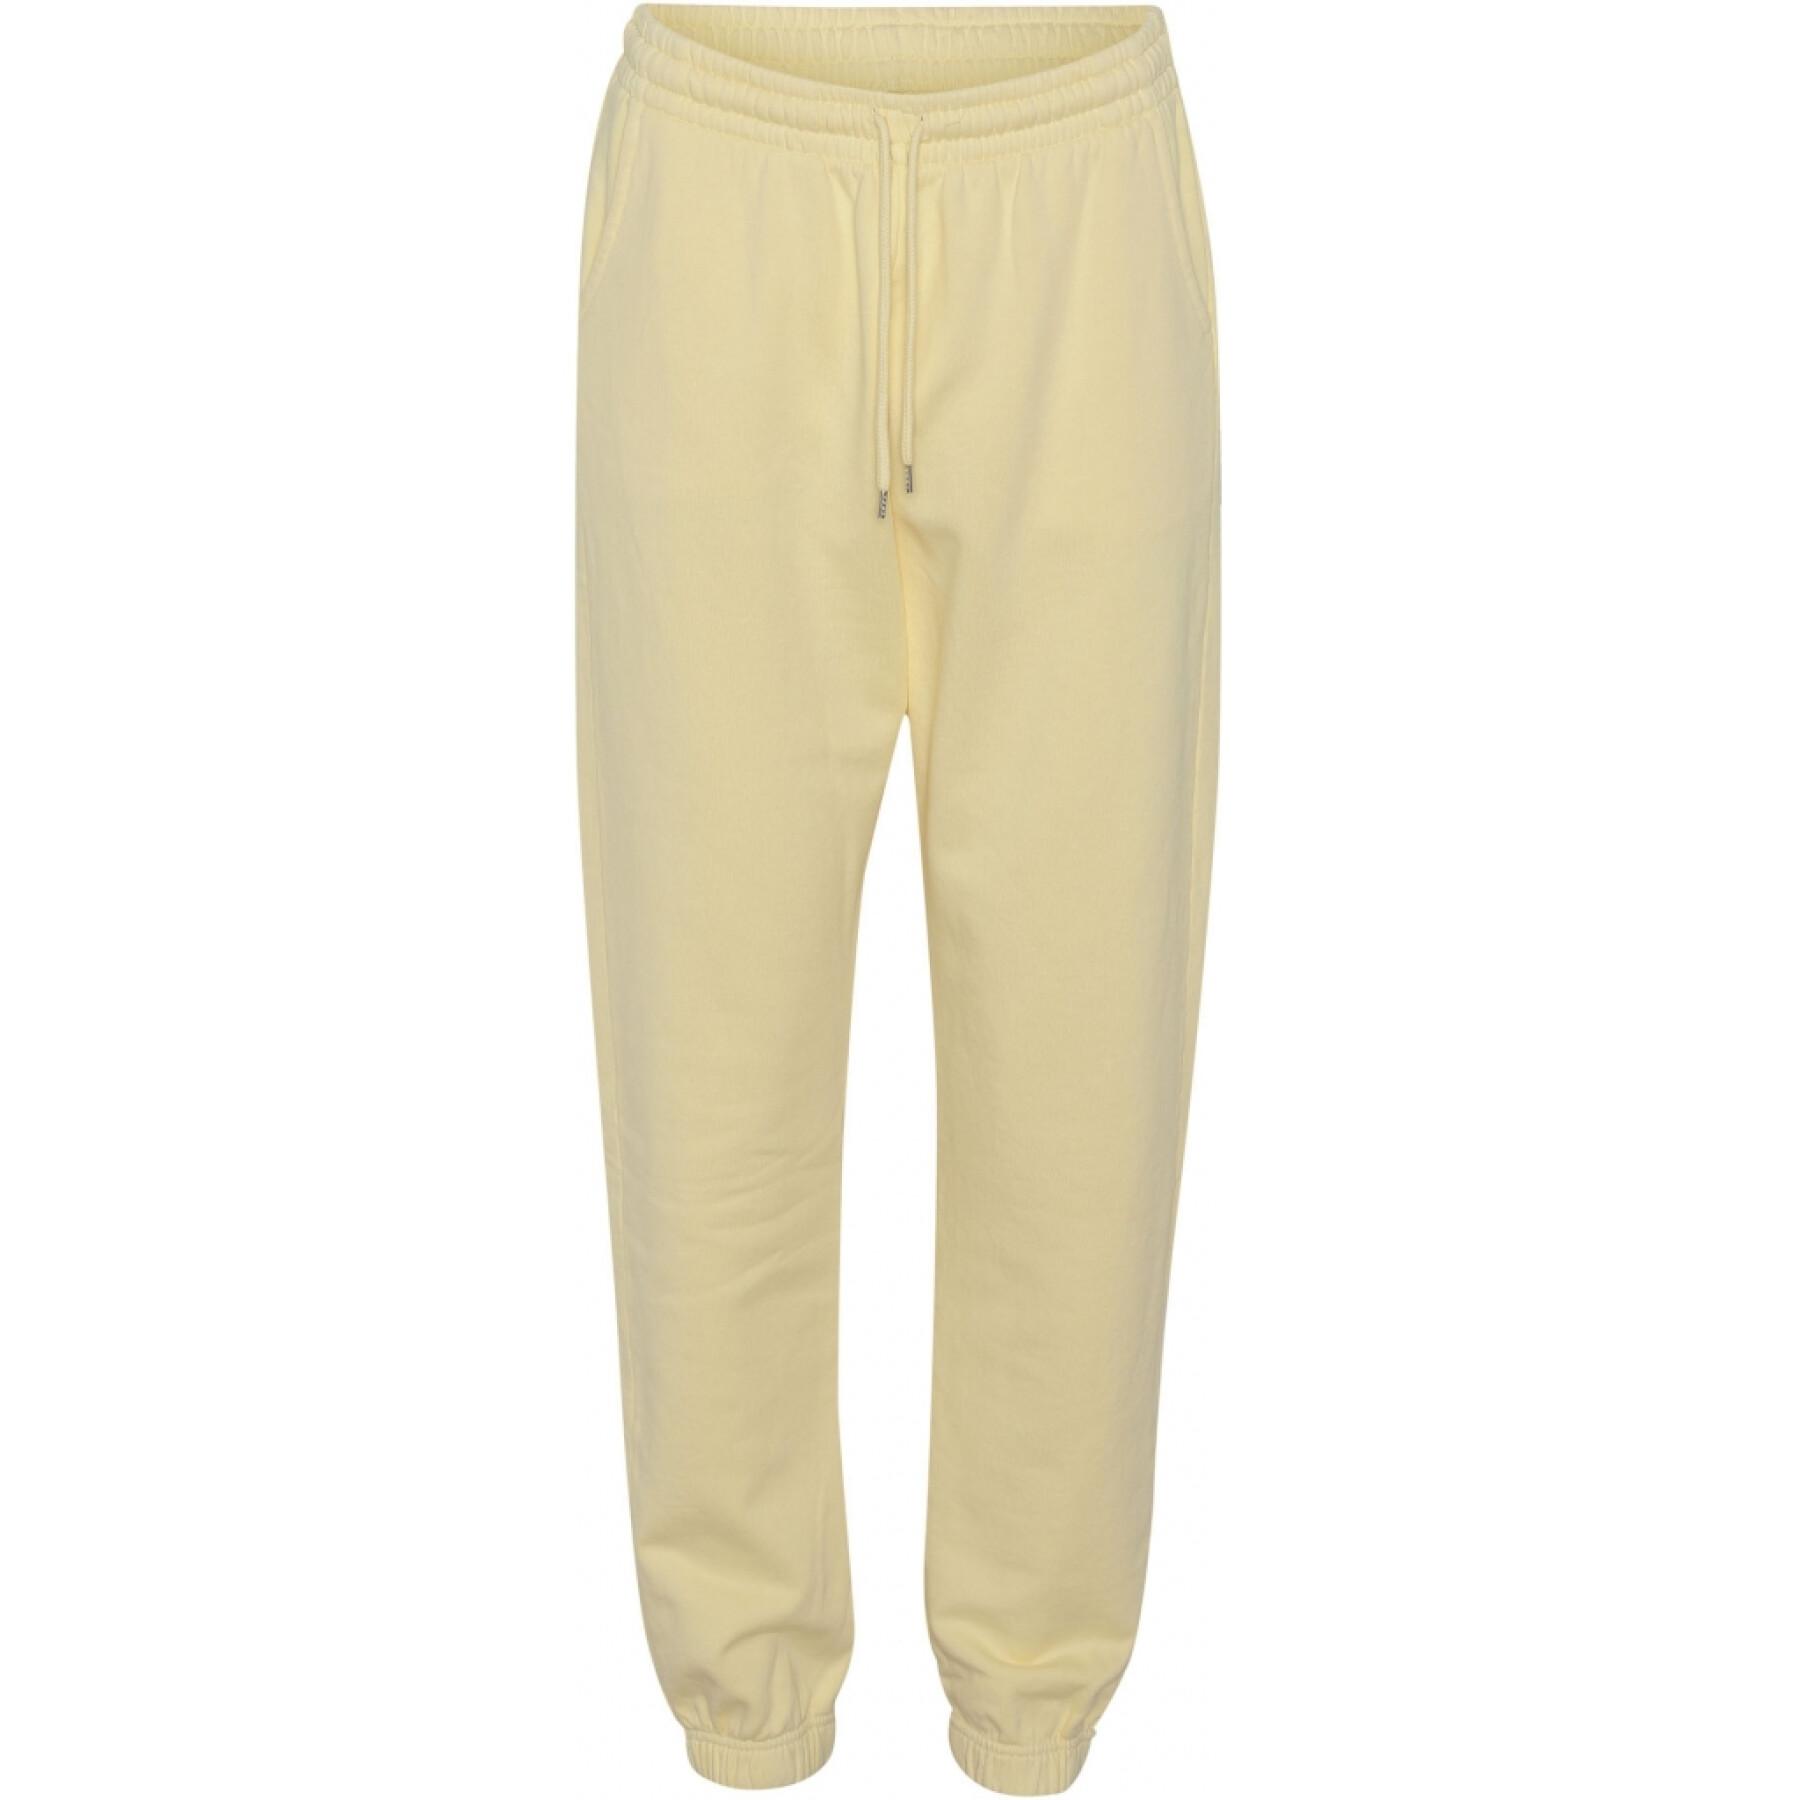 Pantalón de jogging Colorful Standard Organic amarillo pálido